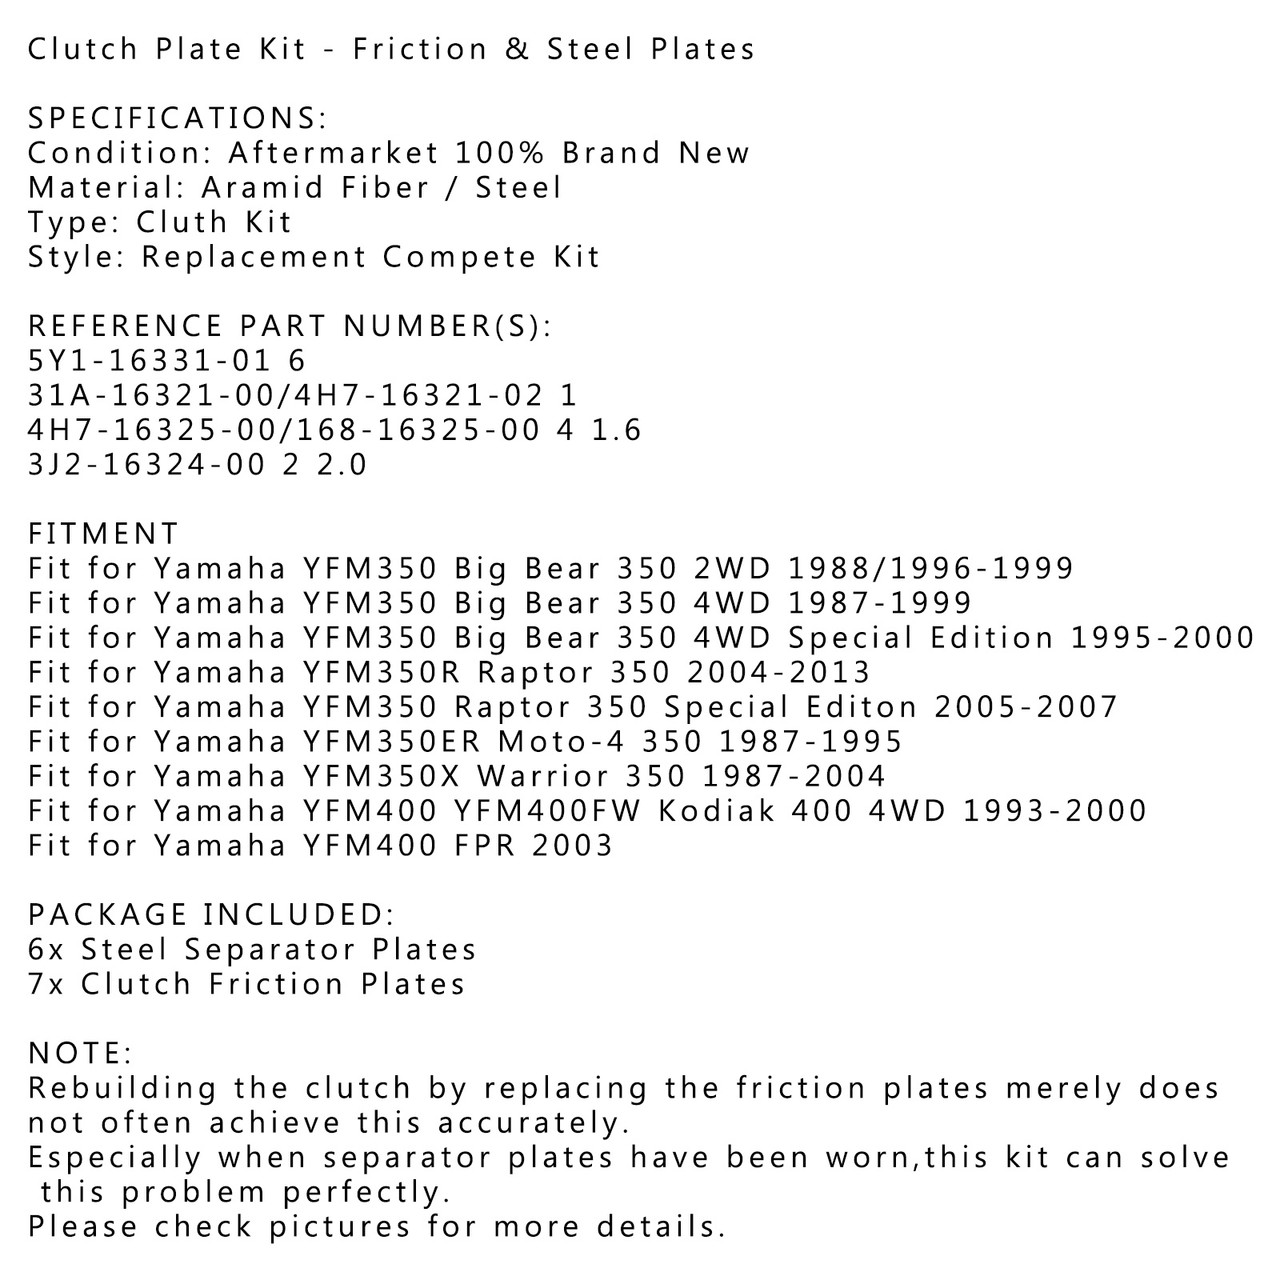 Clutch Plate Kit Fit For Yamaha YFM350 Big Bear 350 2WD 96-99 YFM350ER Moto-4 350 87-95 YFM350X Warrior 350 87-04